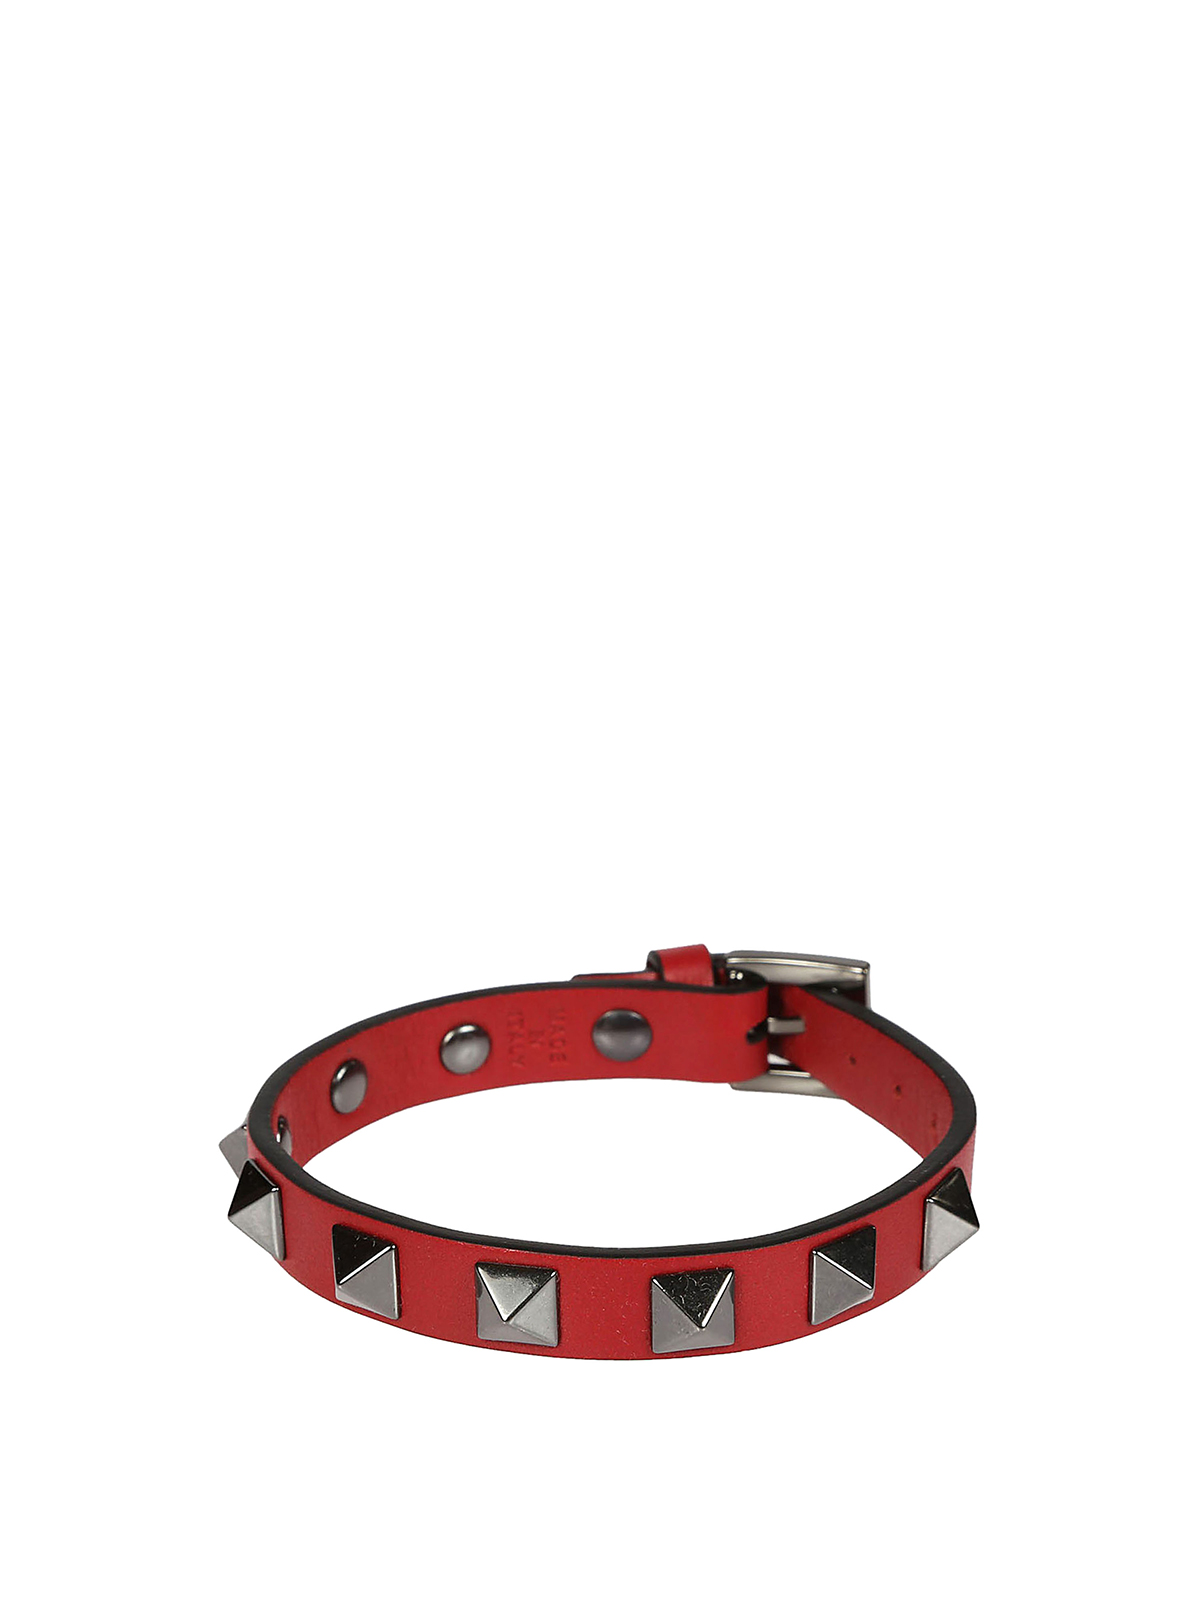 Nuværende kampagne Ombord Bracelets & Bangles Valentino Garavani - Rockstud red leather bracelet -  PY2J0801VH30RO